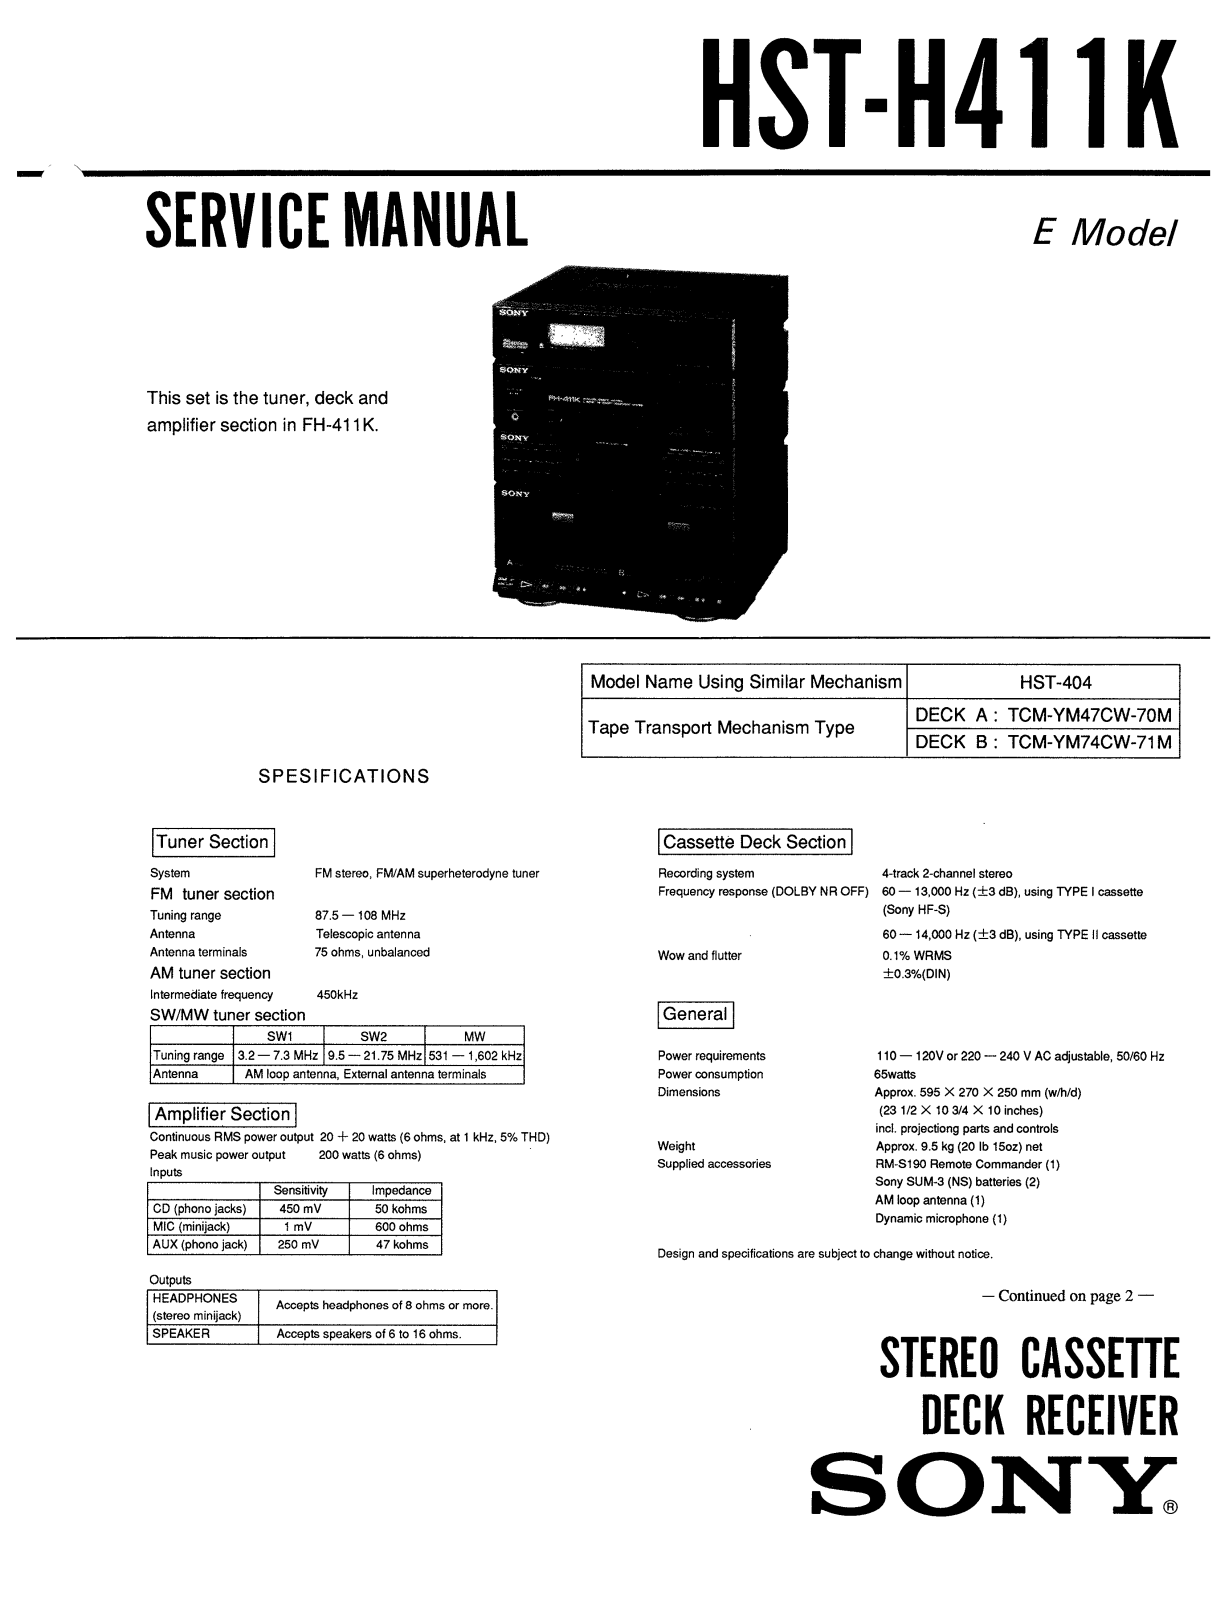 Sony HSTH-411-K Service manual